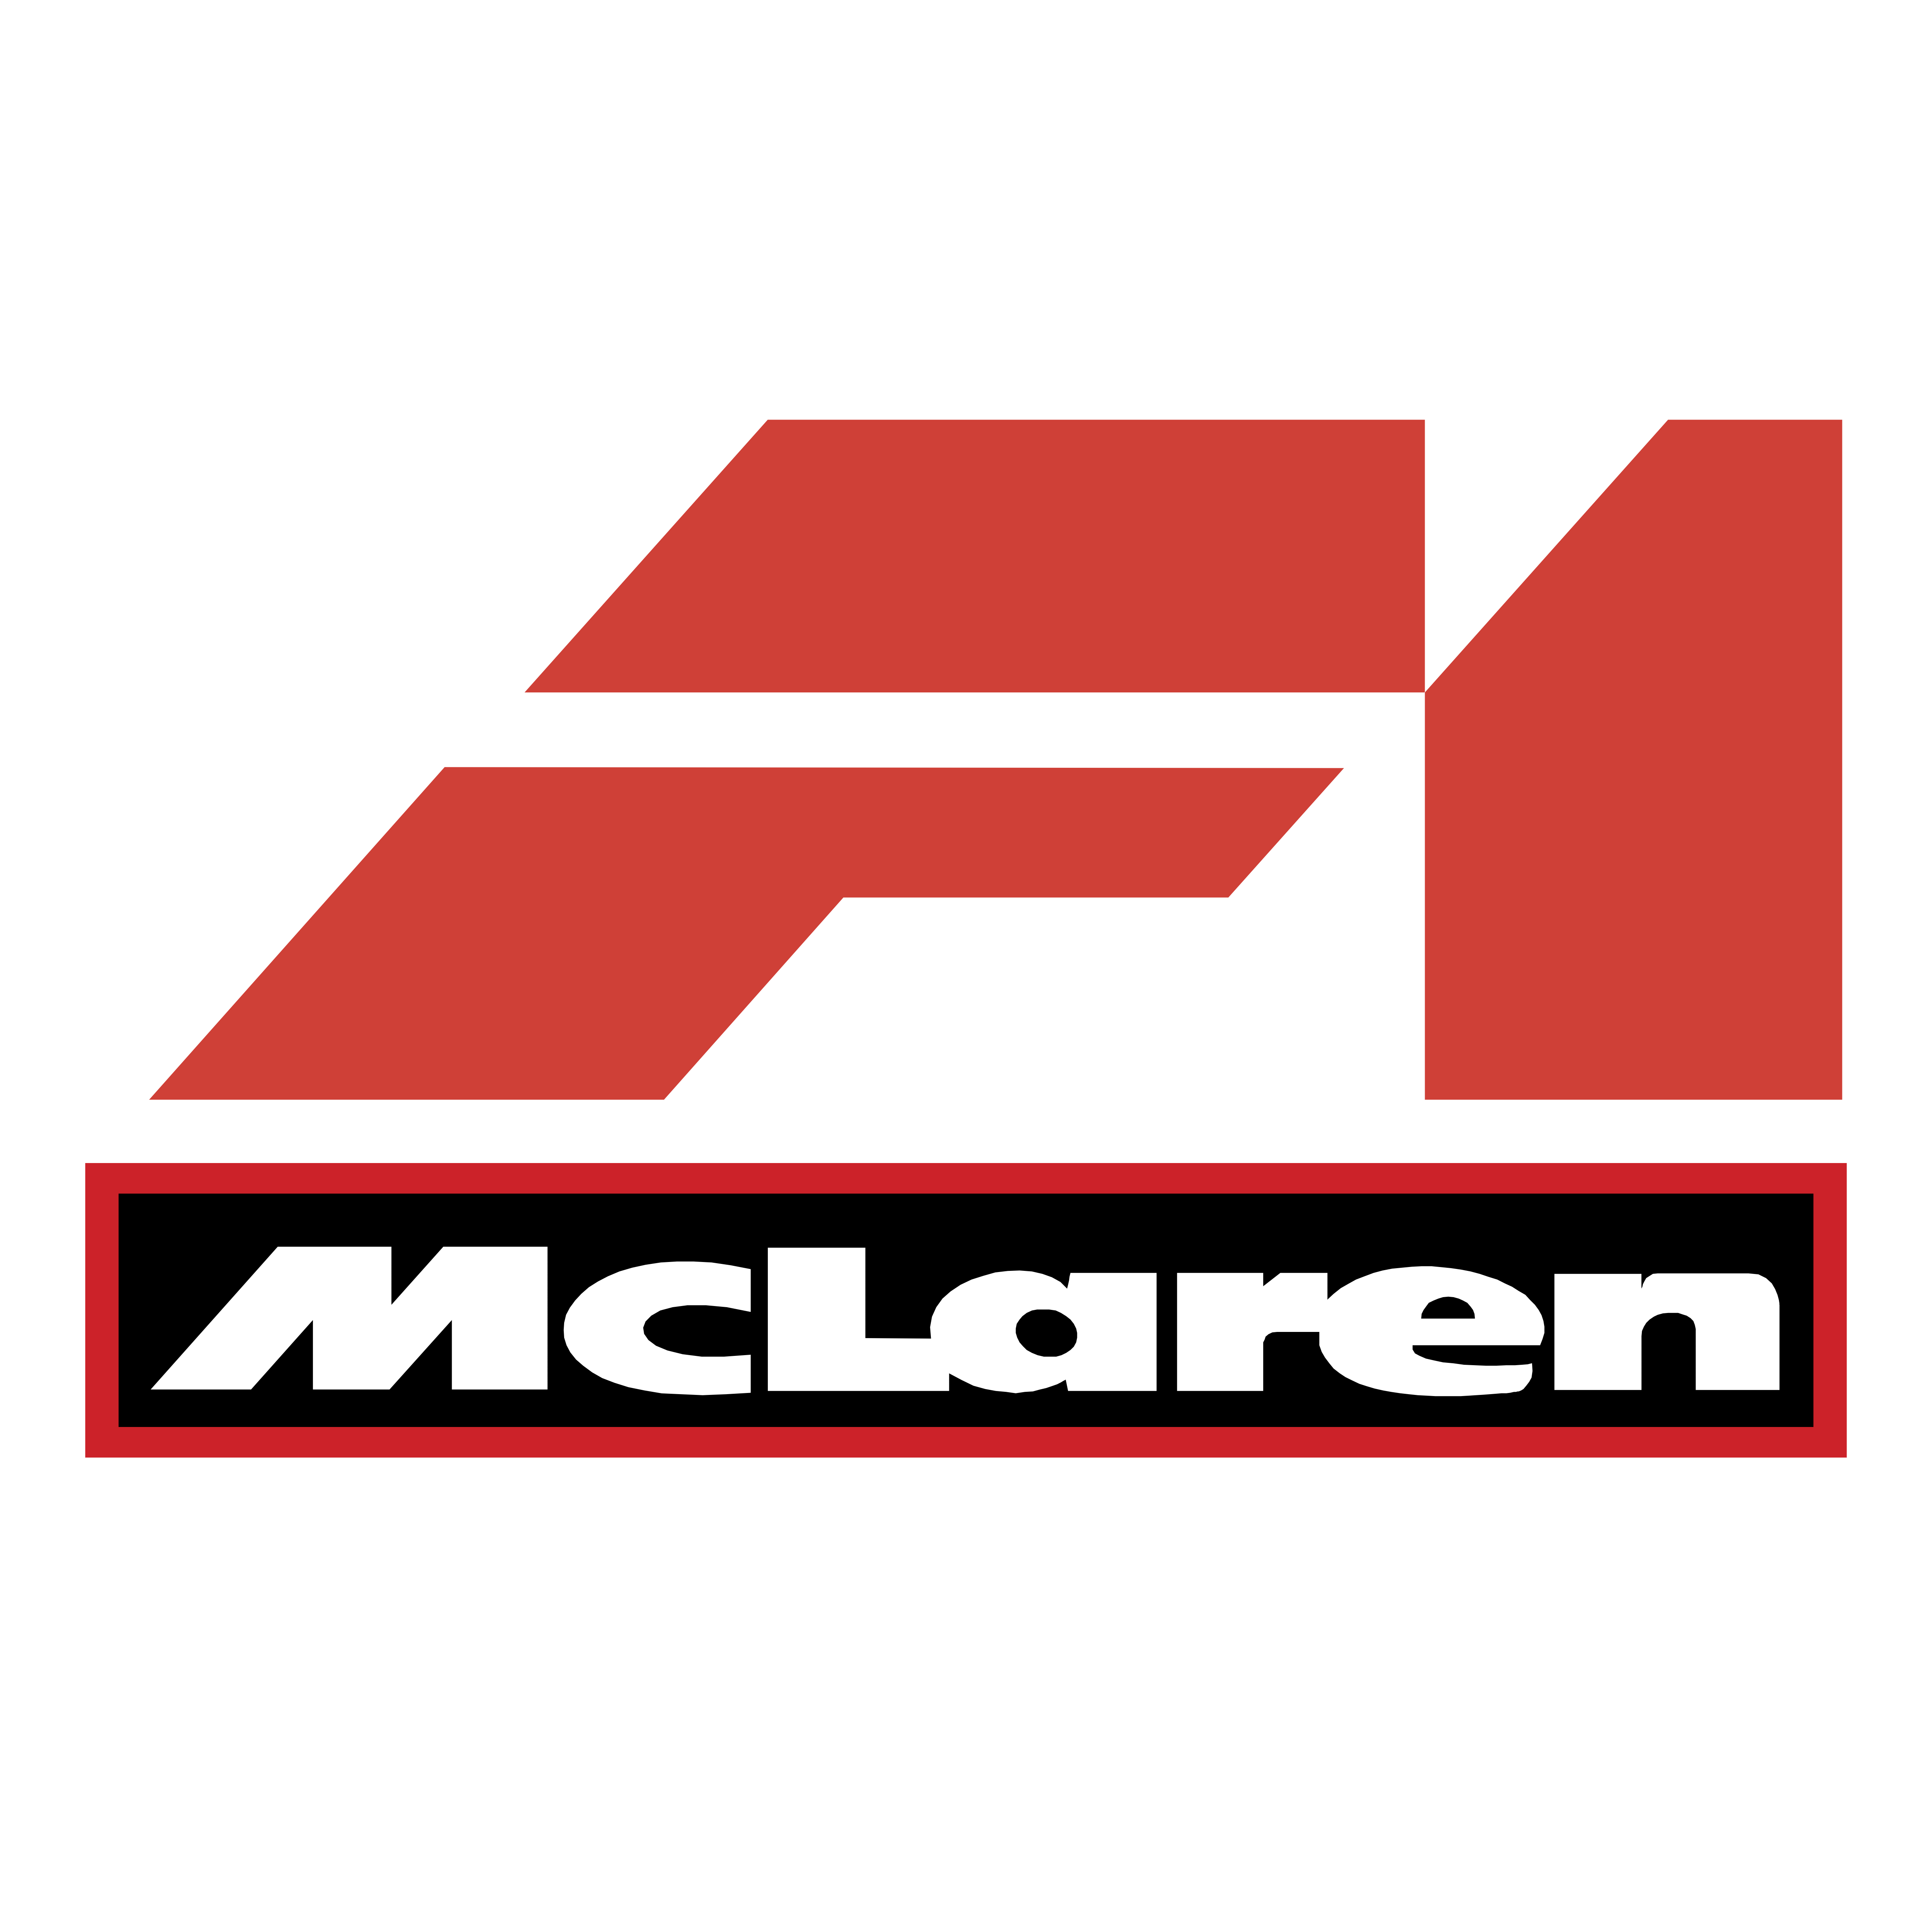 McLaren - Logos Download